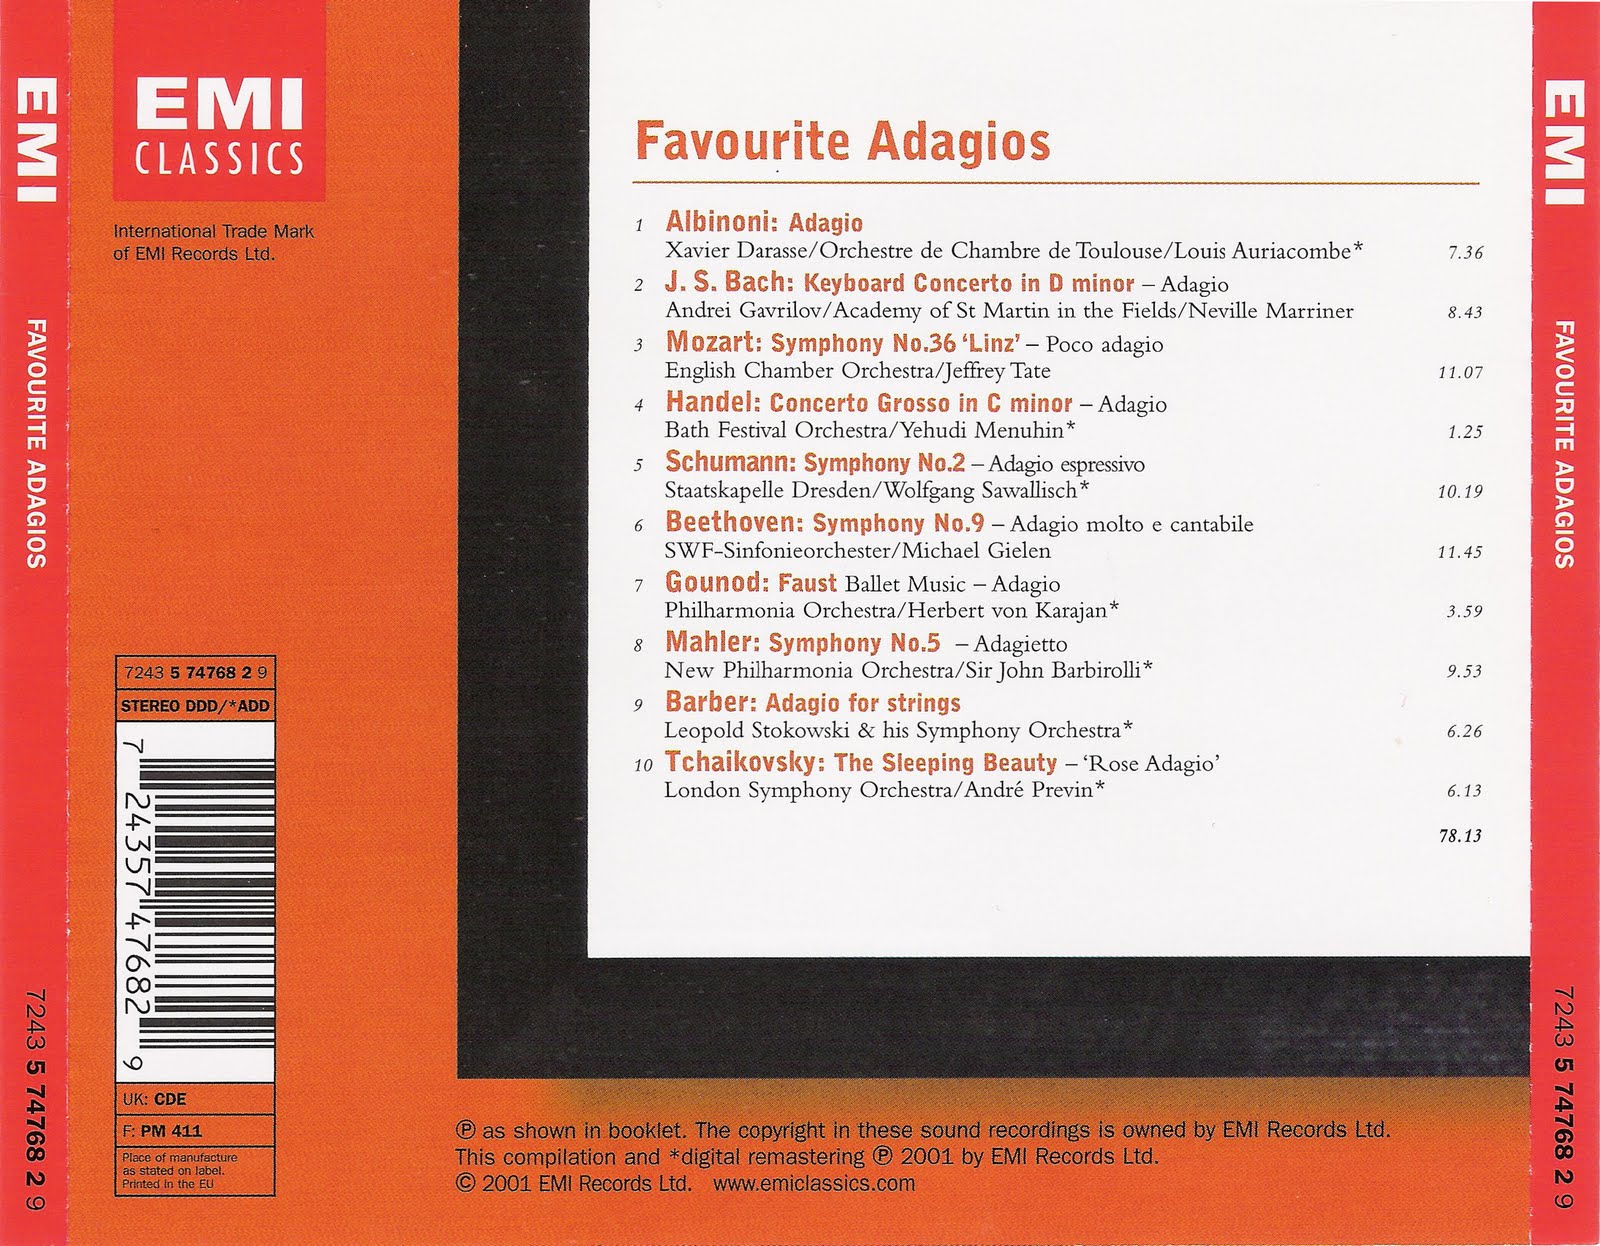 Baroque Music Albinoni Adagio Virtuoso 2011 CD. Violin Adagios 2cd. Favourite cd